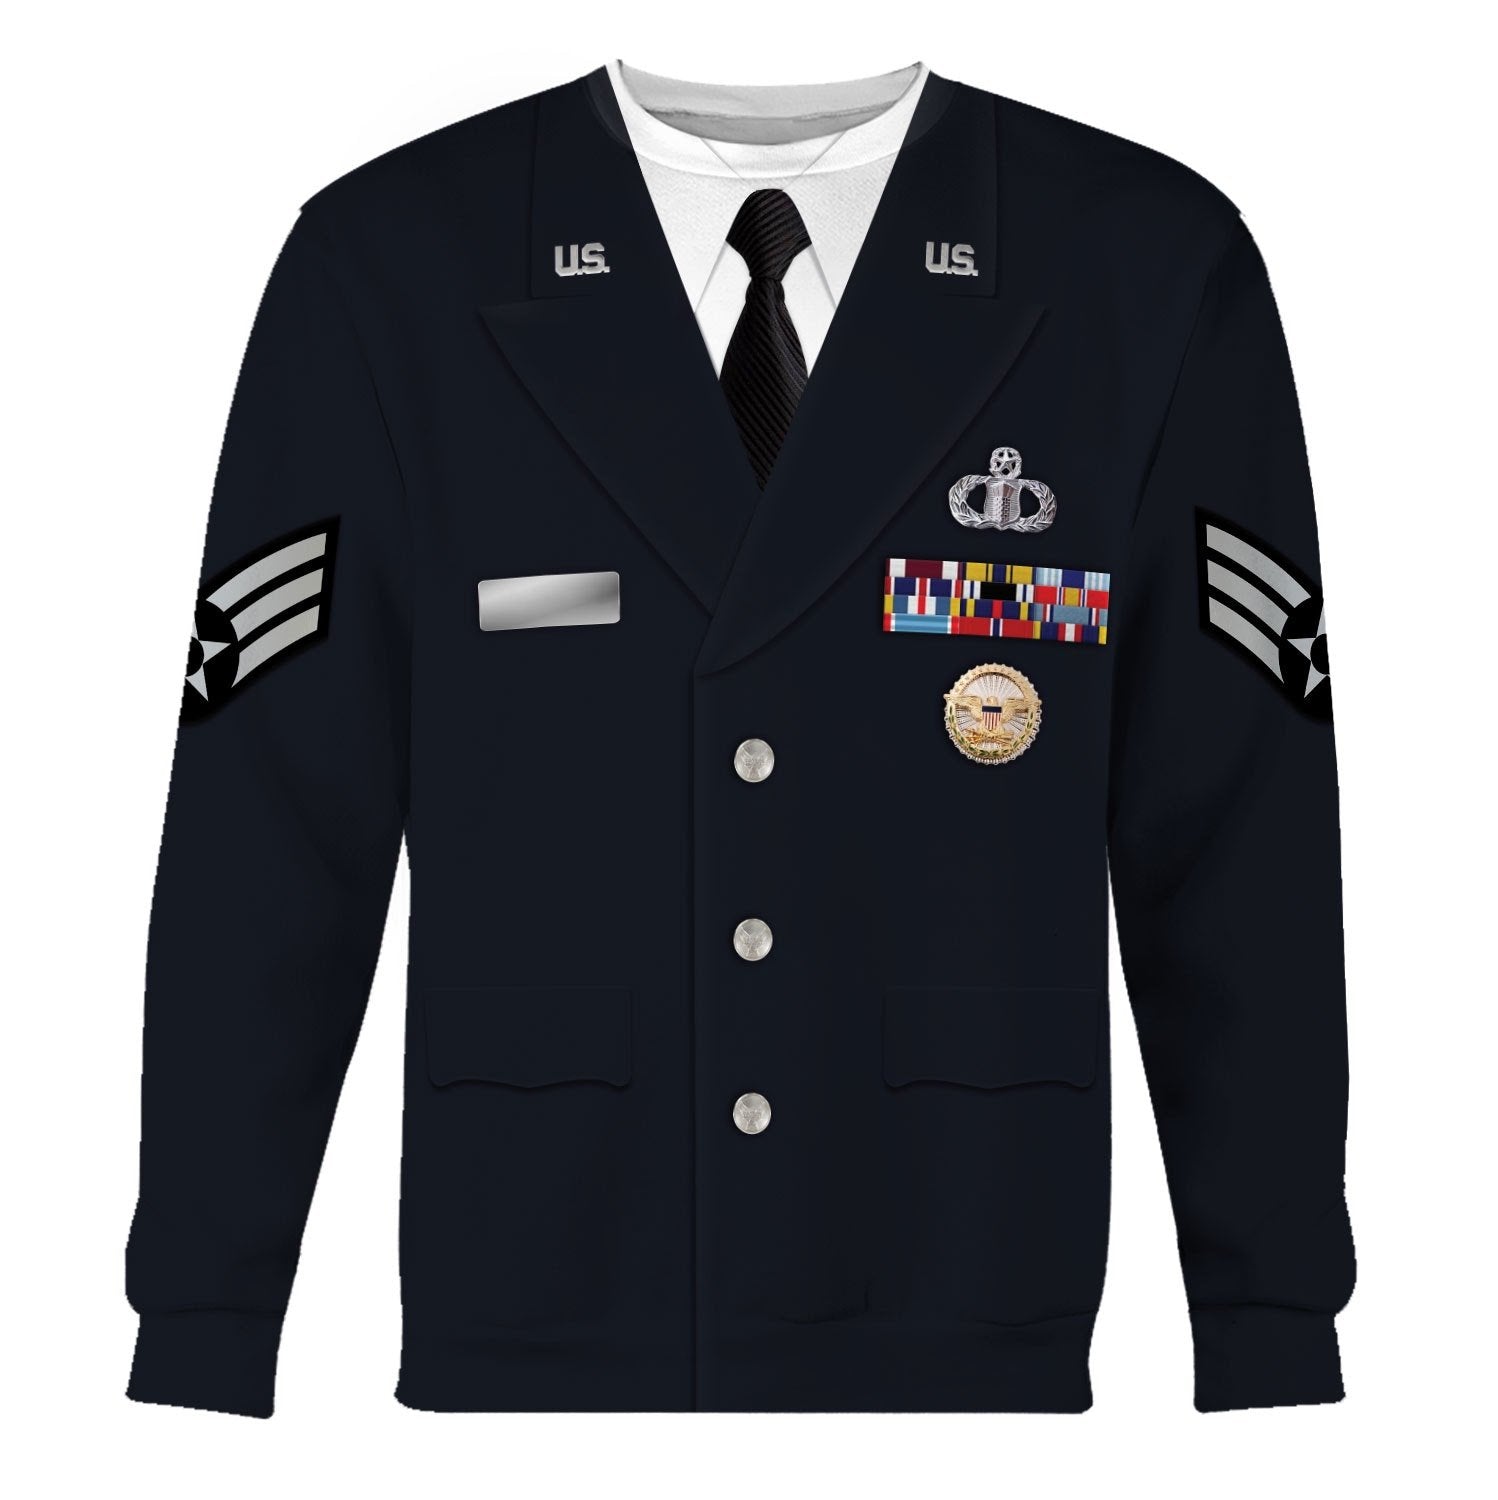 air force service dress